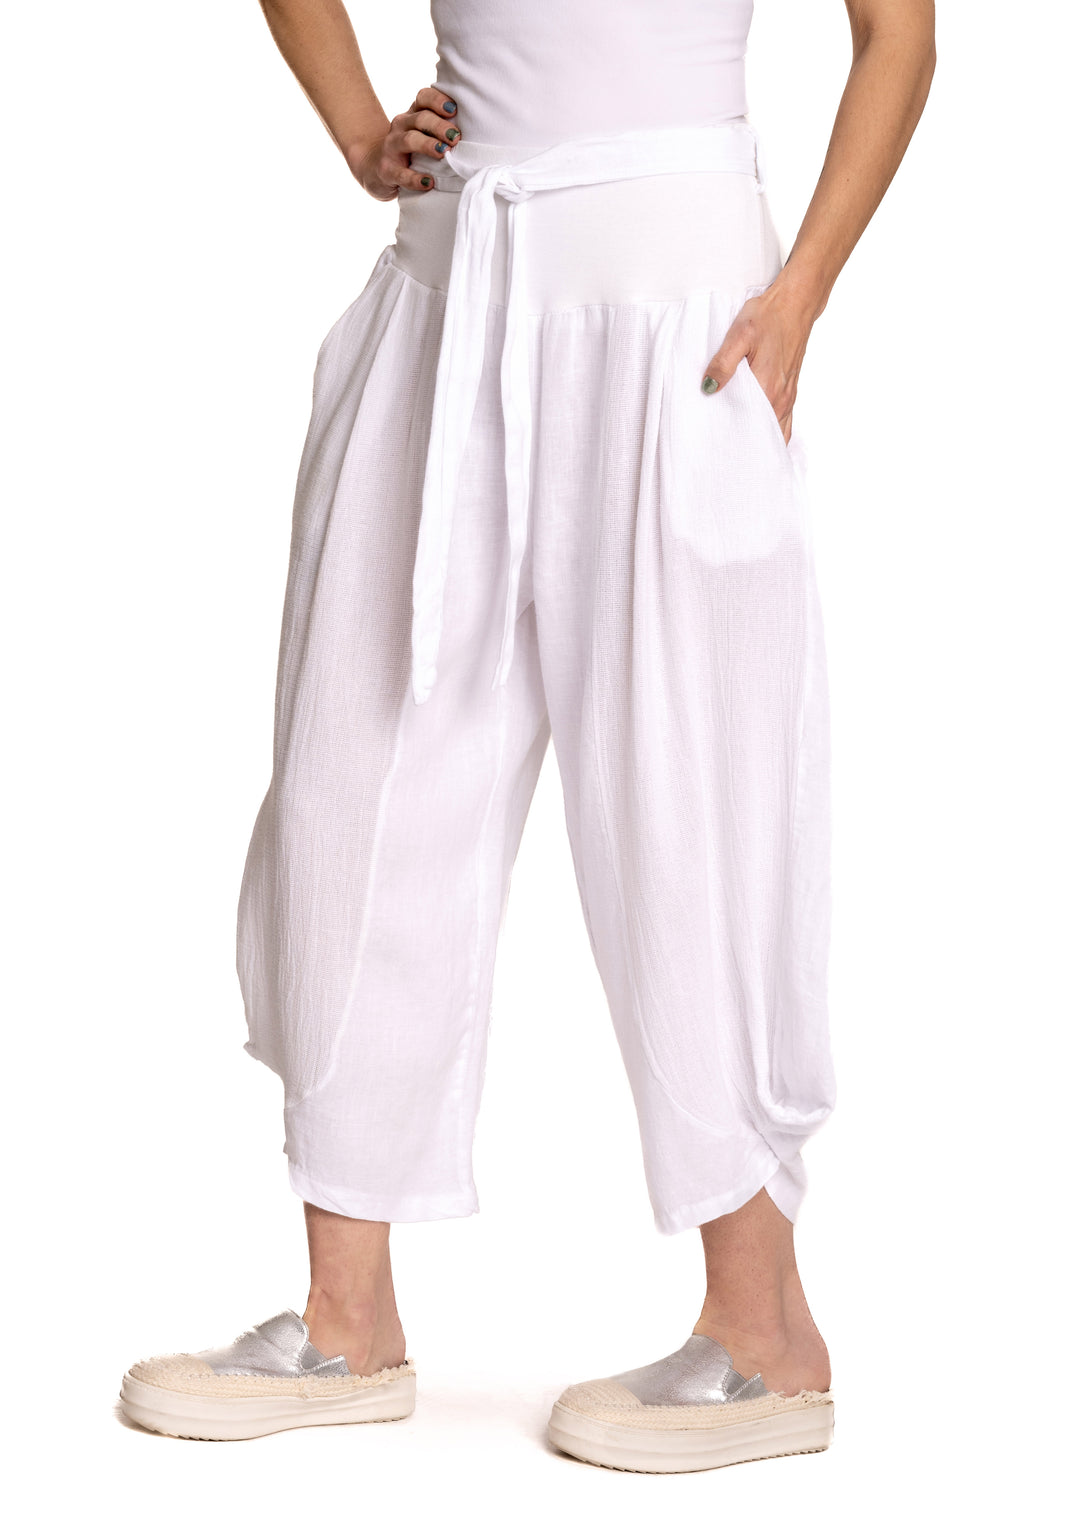 June Pants in White - Imagine Fashion